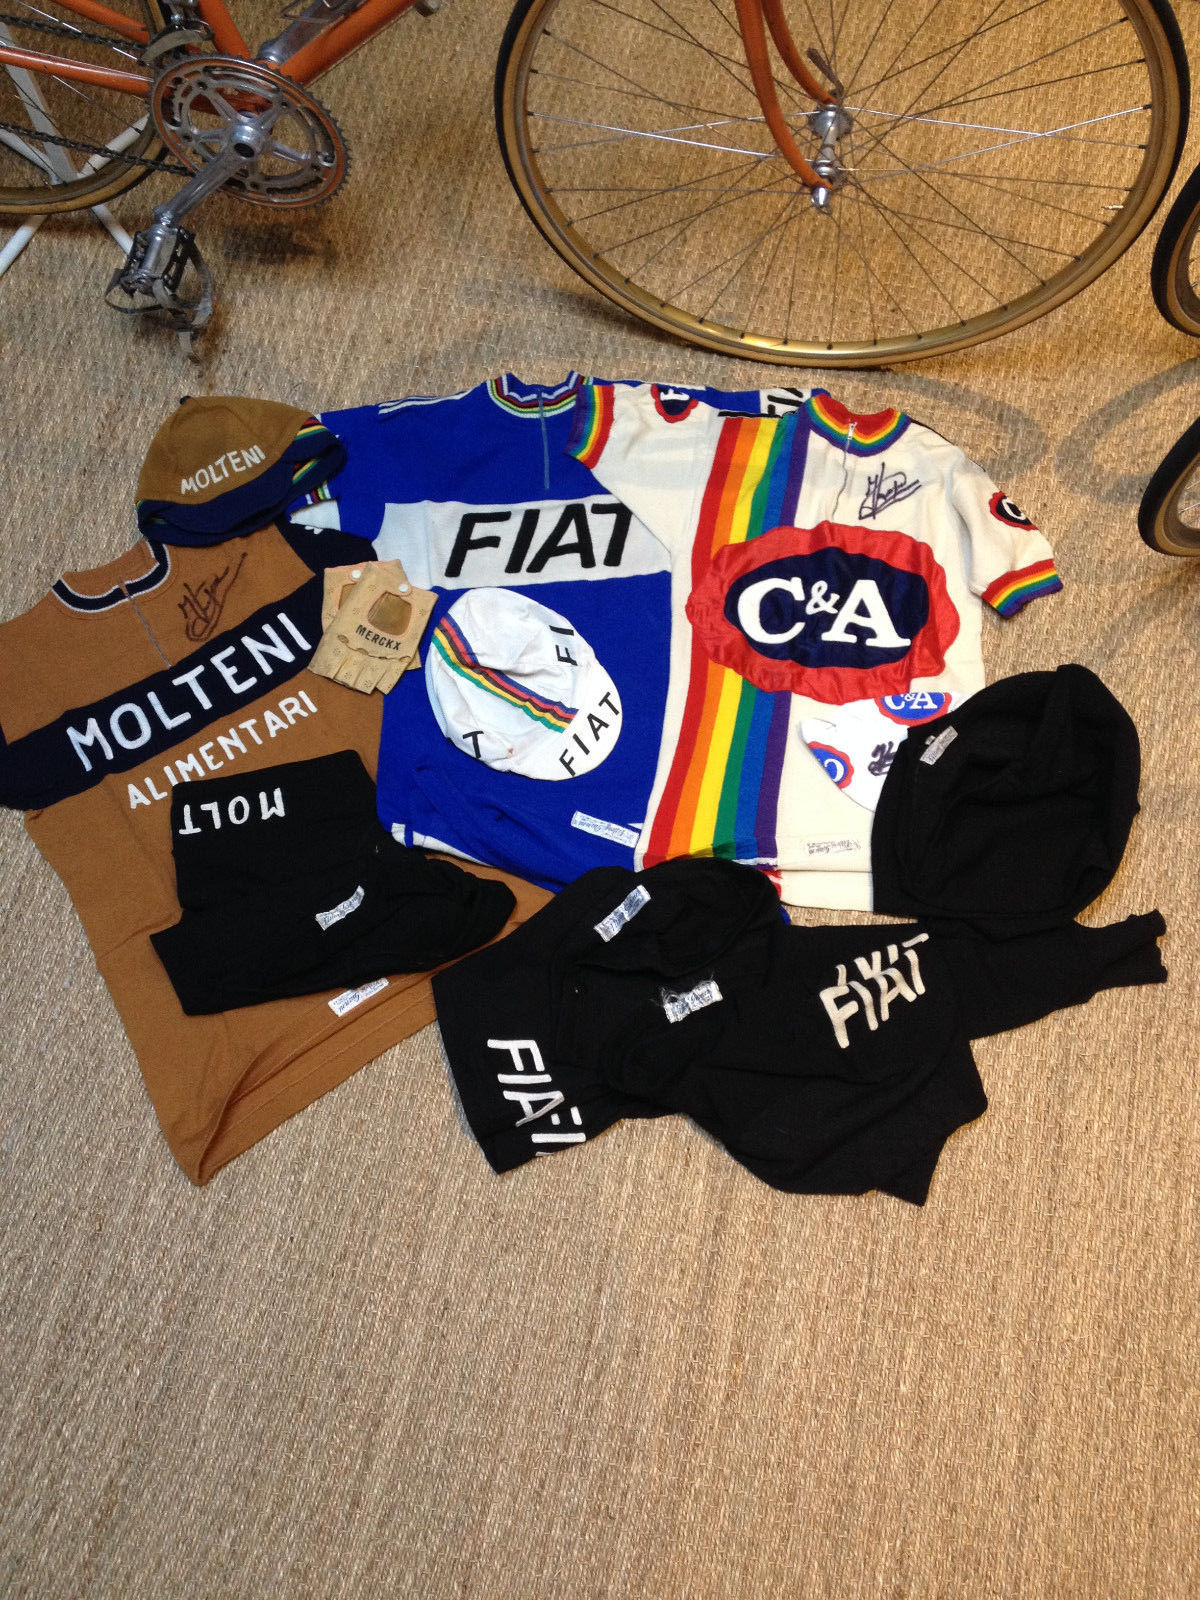 eddy-merckx-jerseys